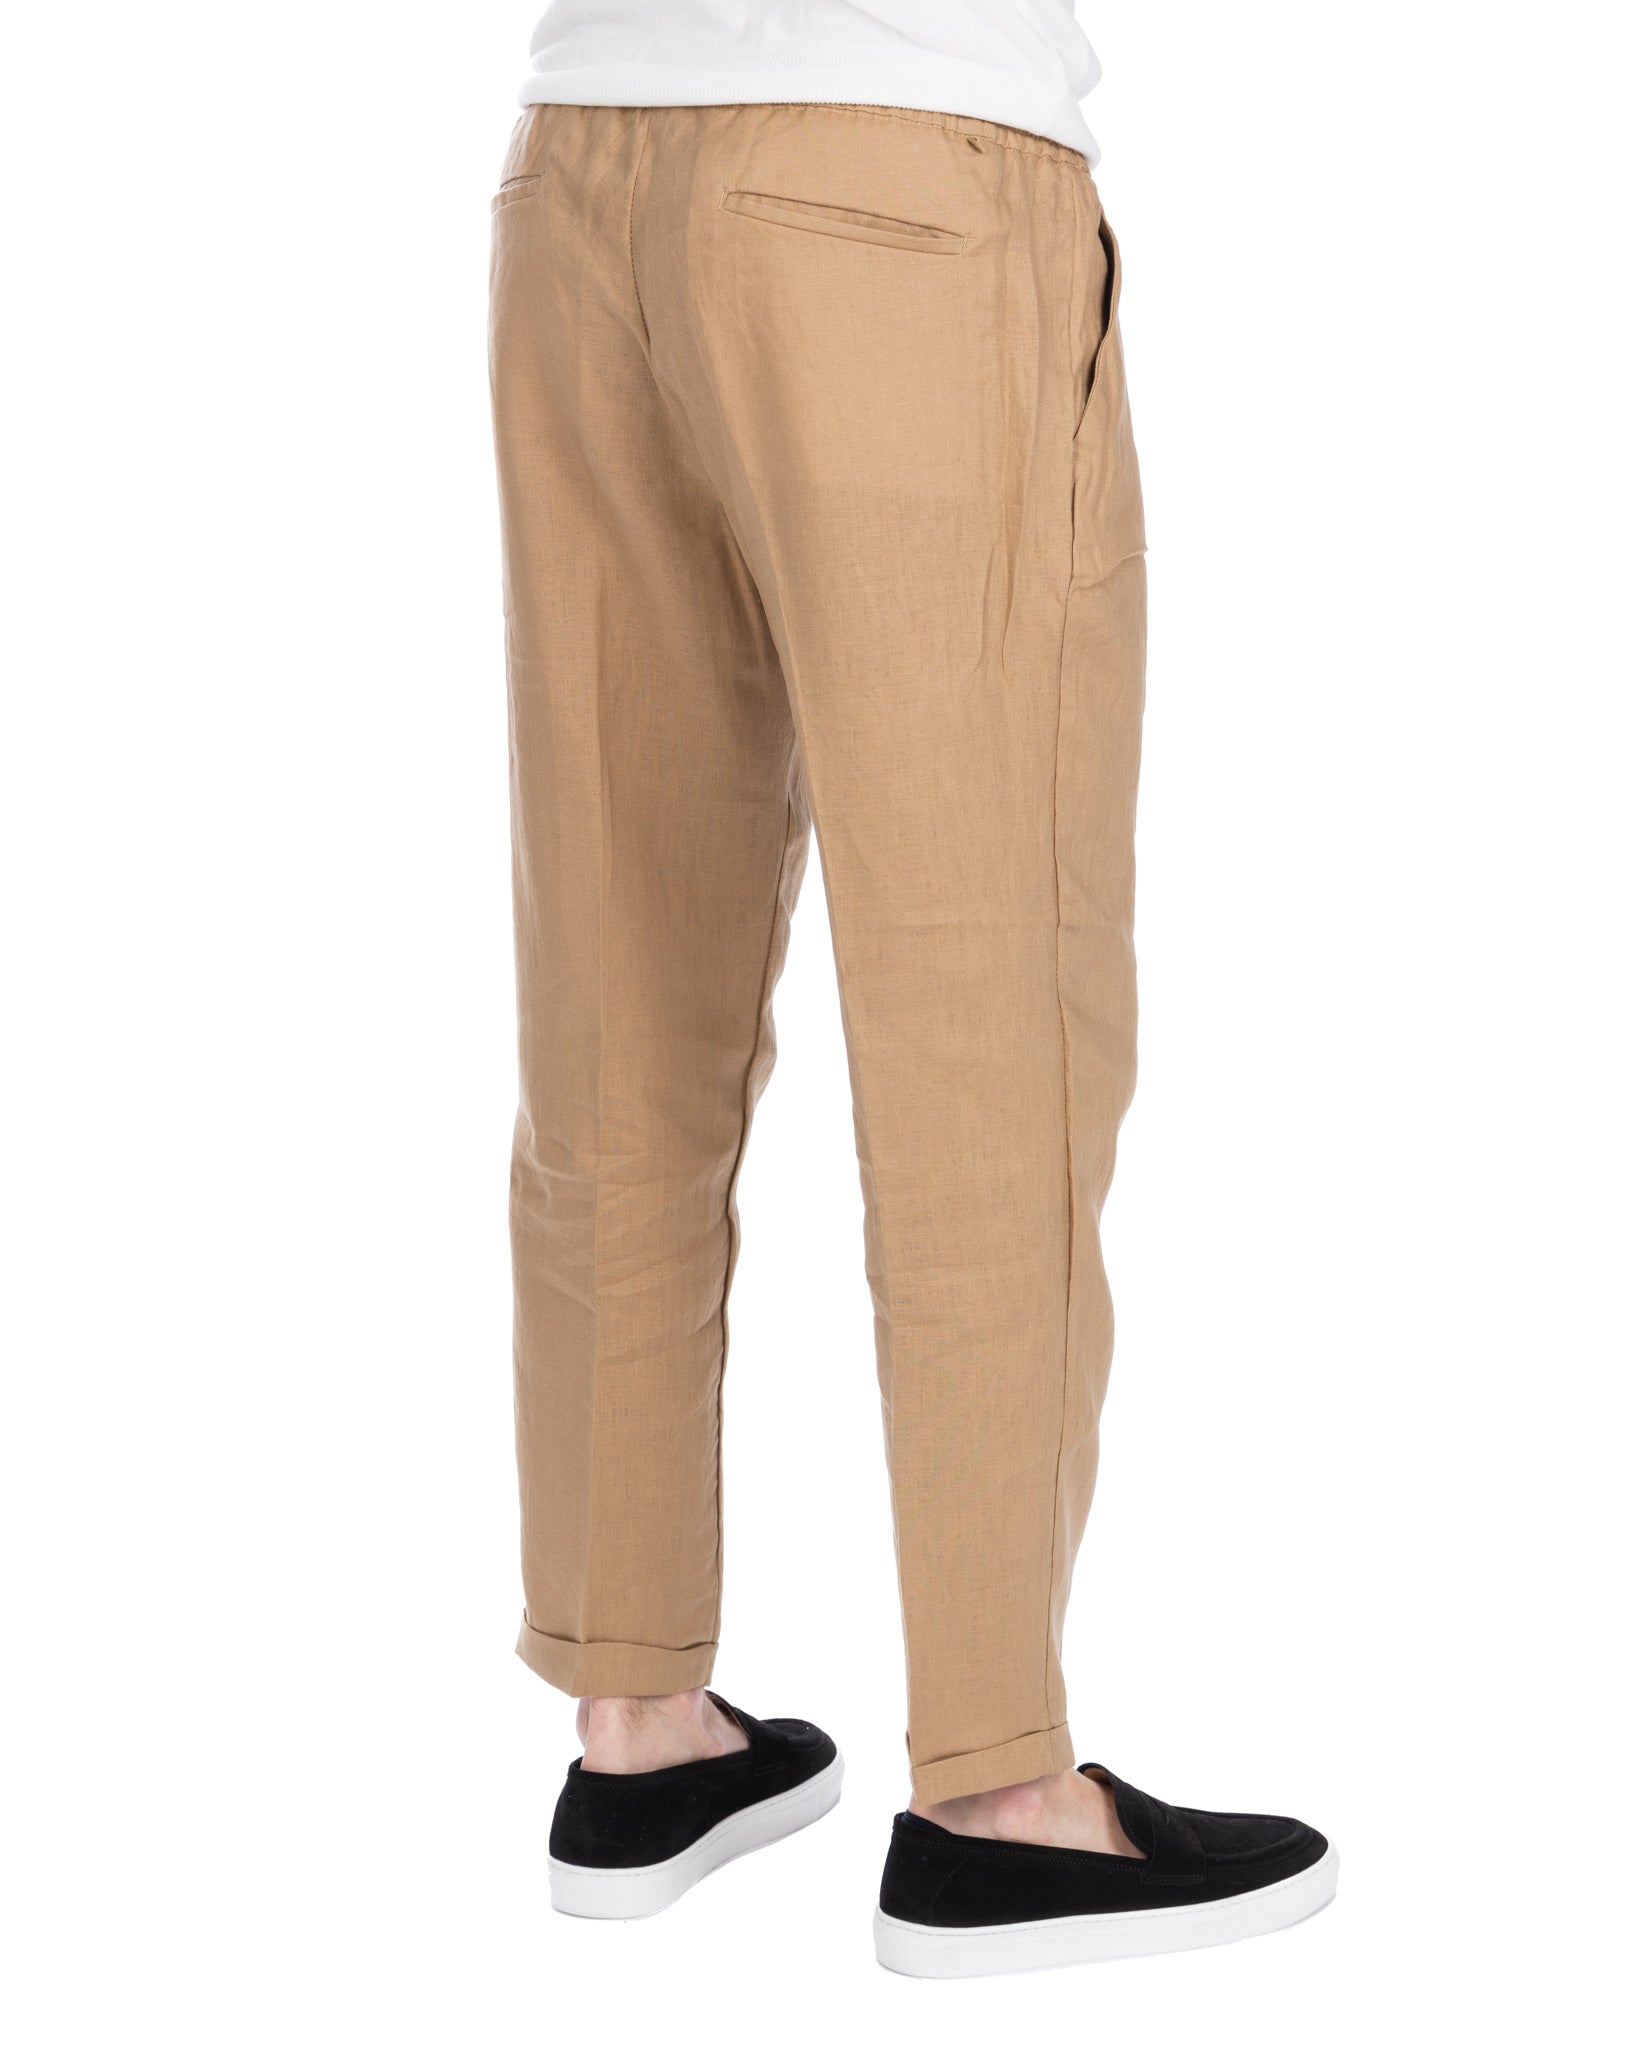 Colin - beige pure linen trousers